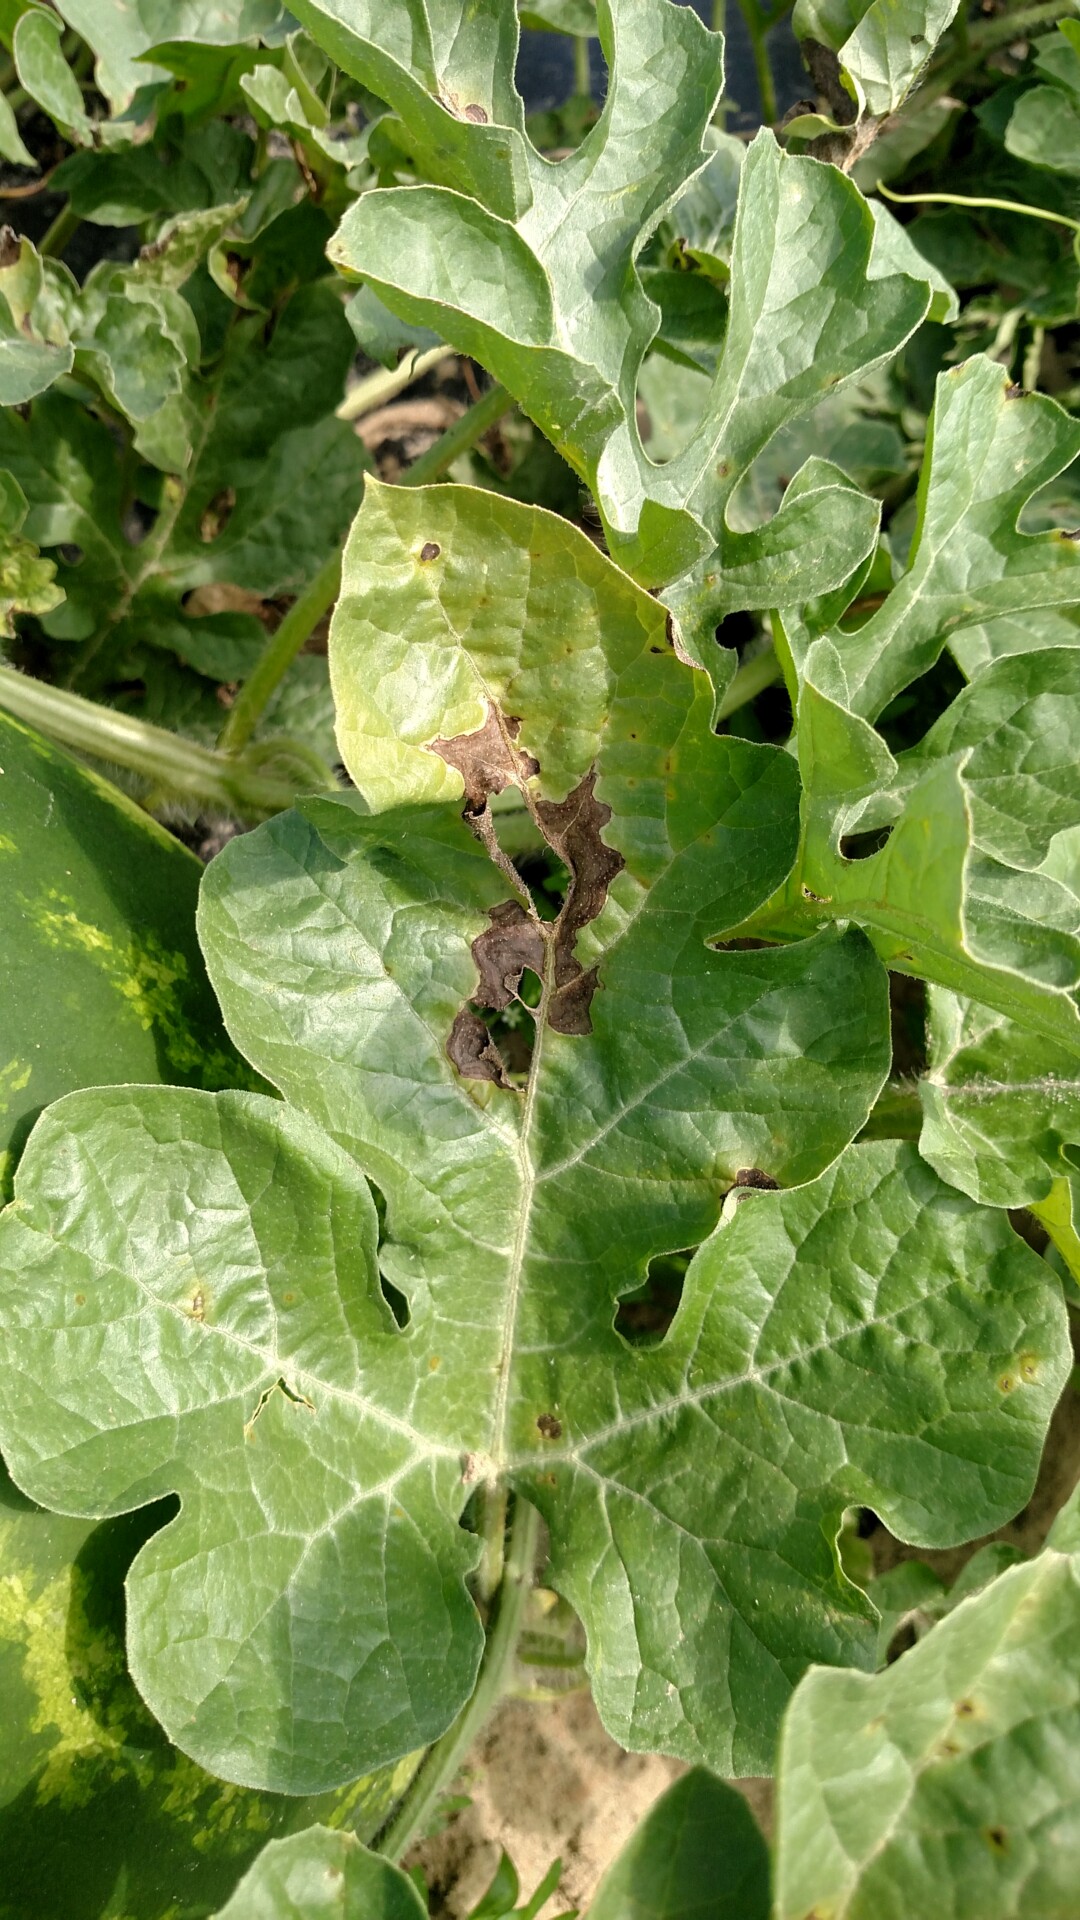 Figure 4. Large gummy stem blight lesion along the midrib of a watermelon leaf